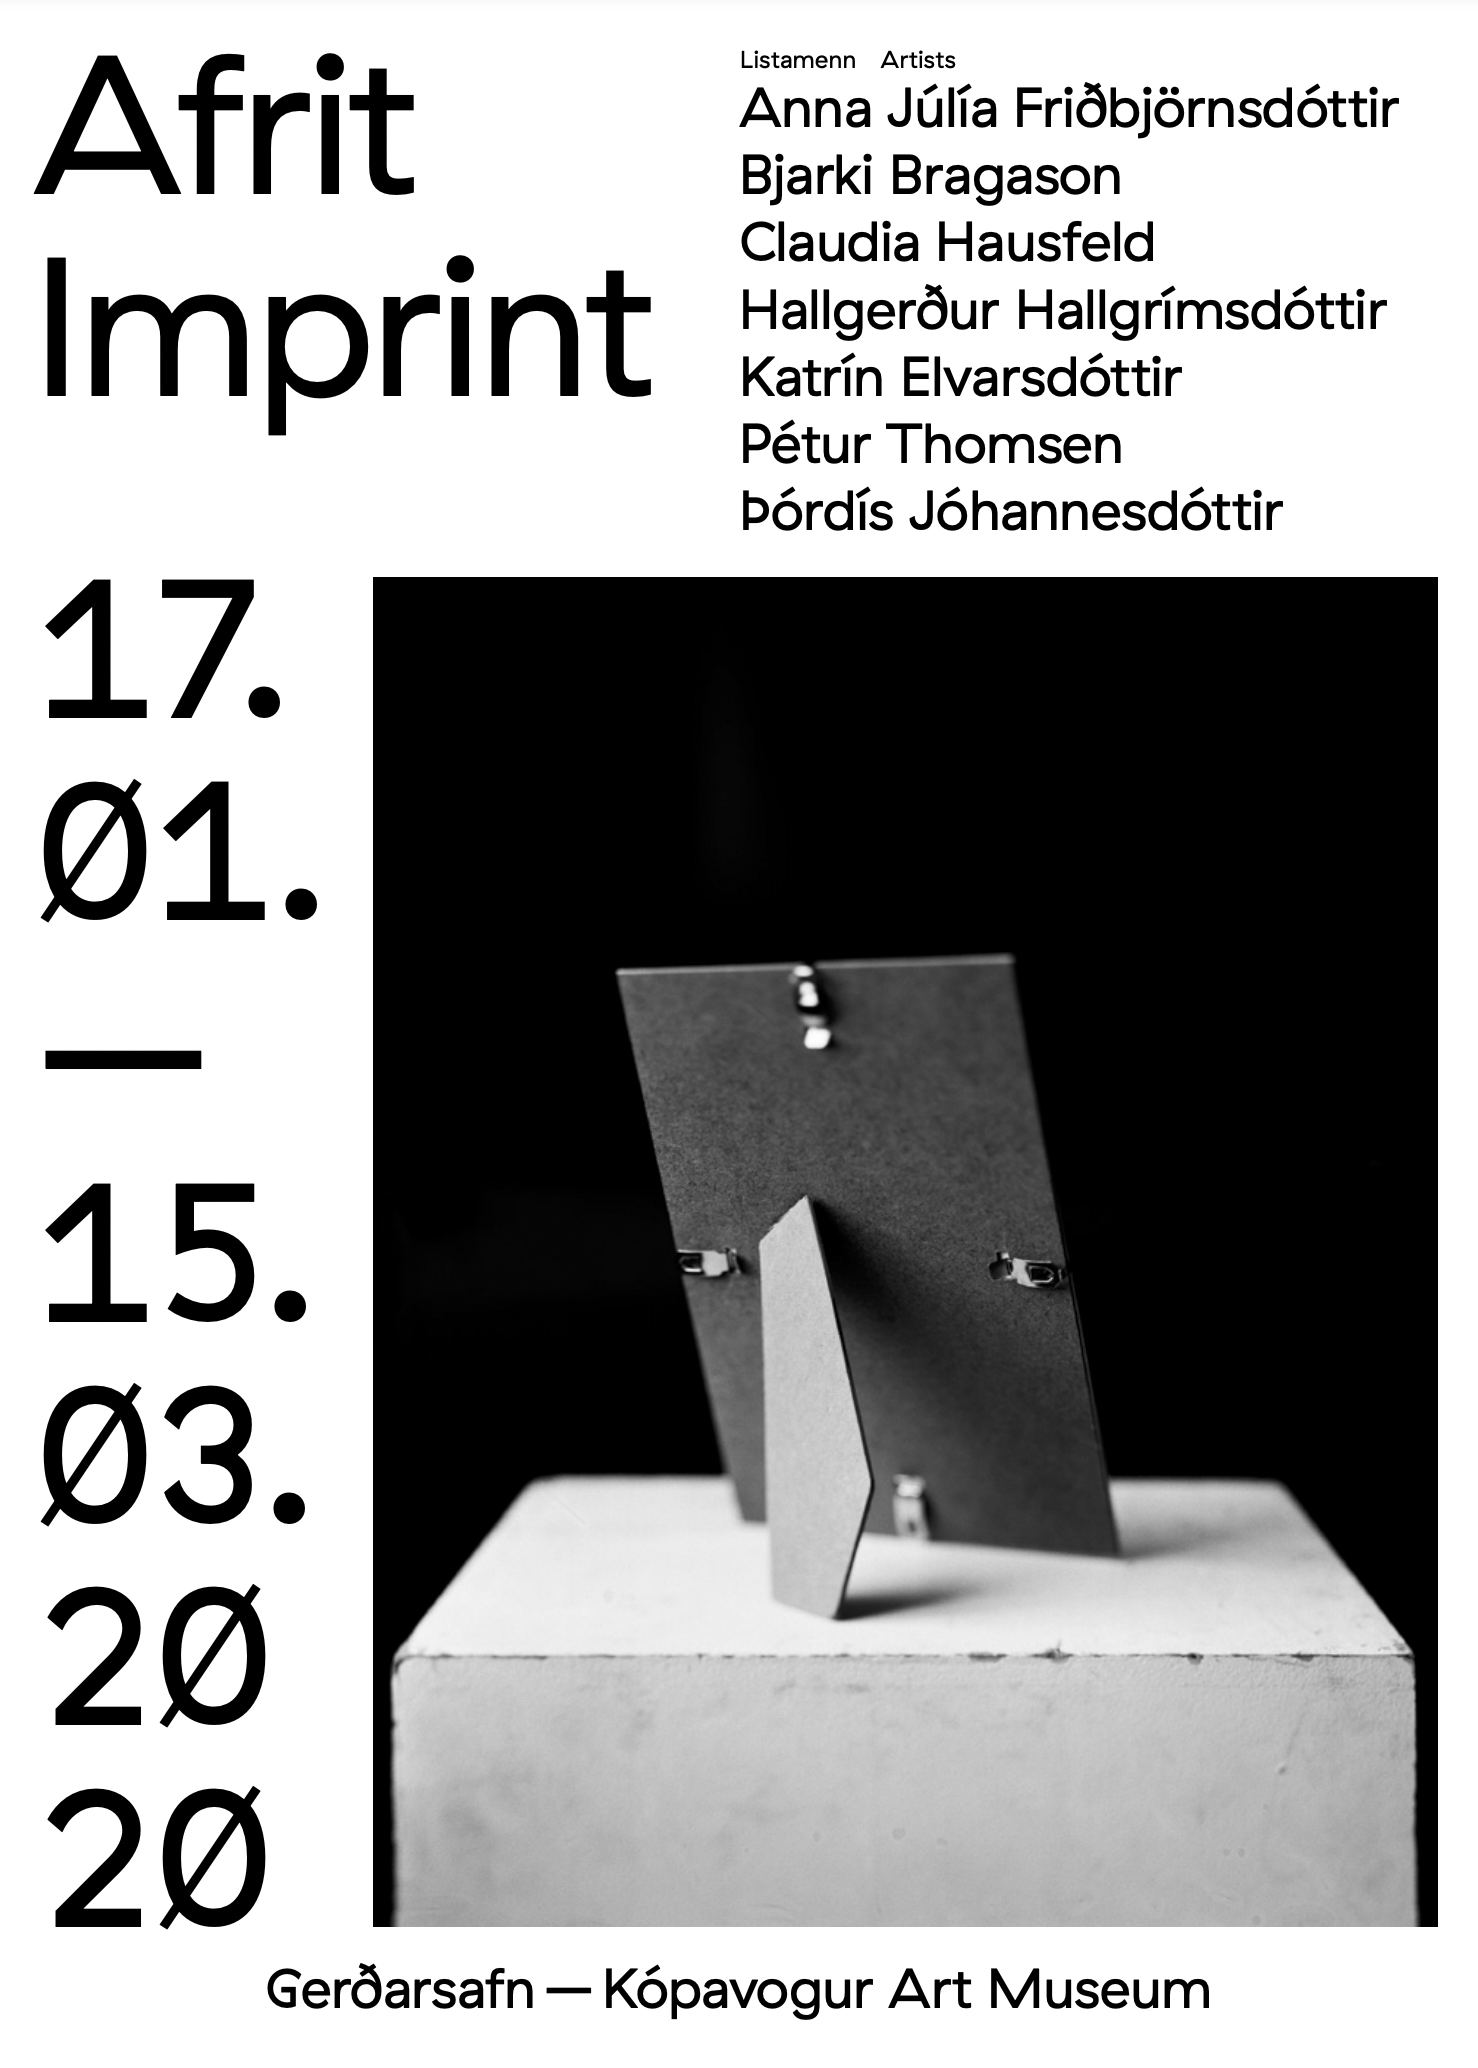 Afrit Imprint  Various Artists